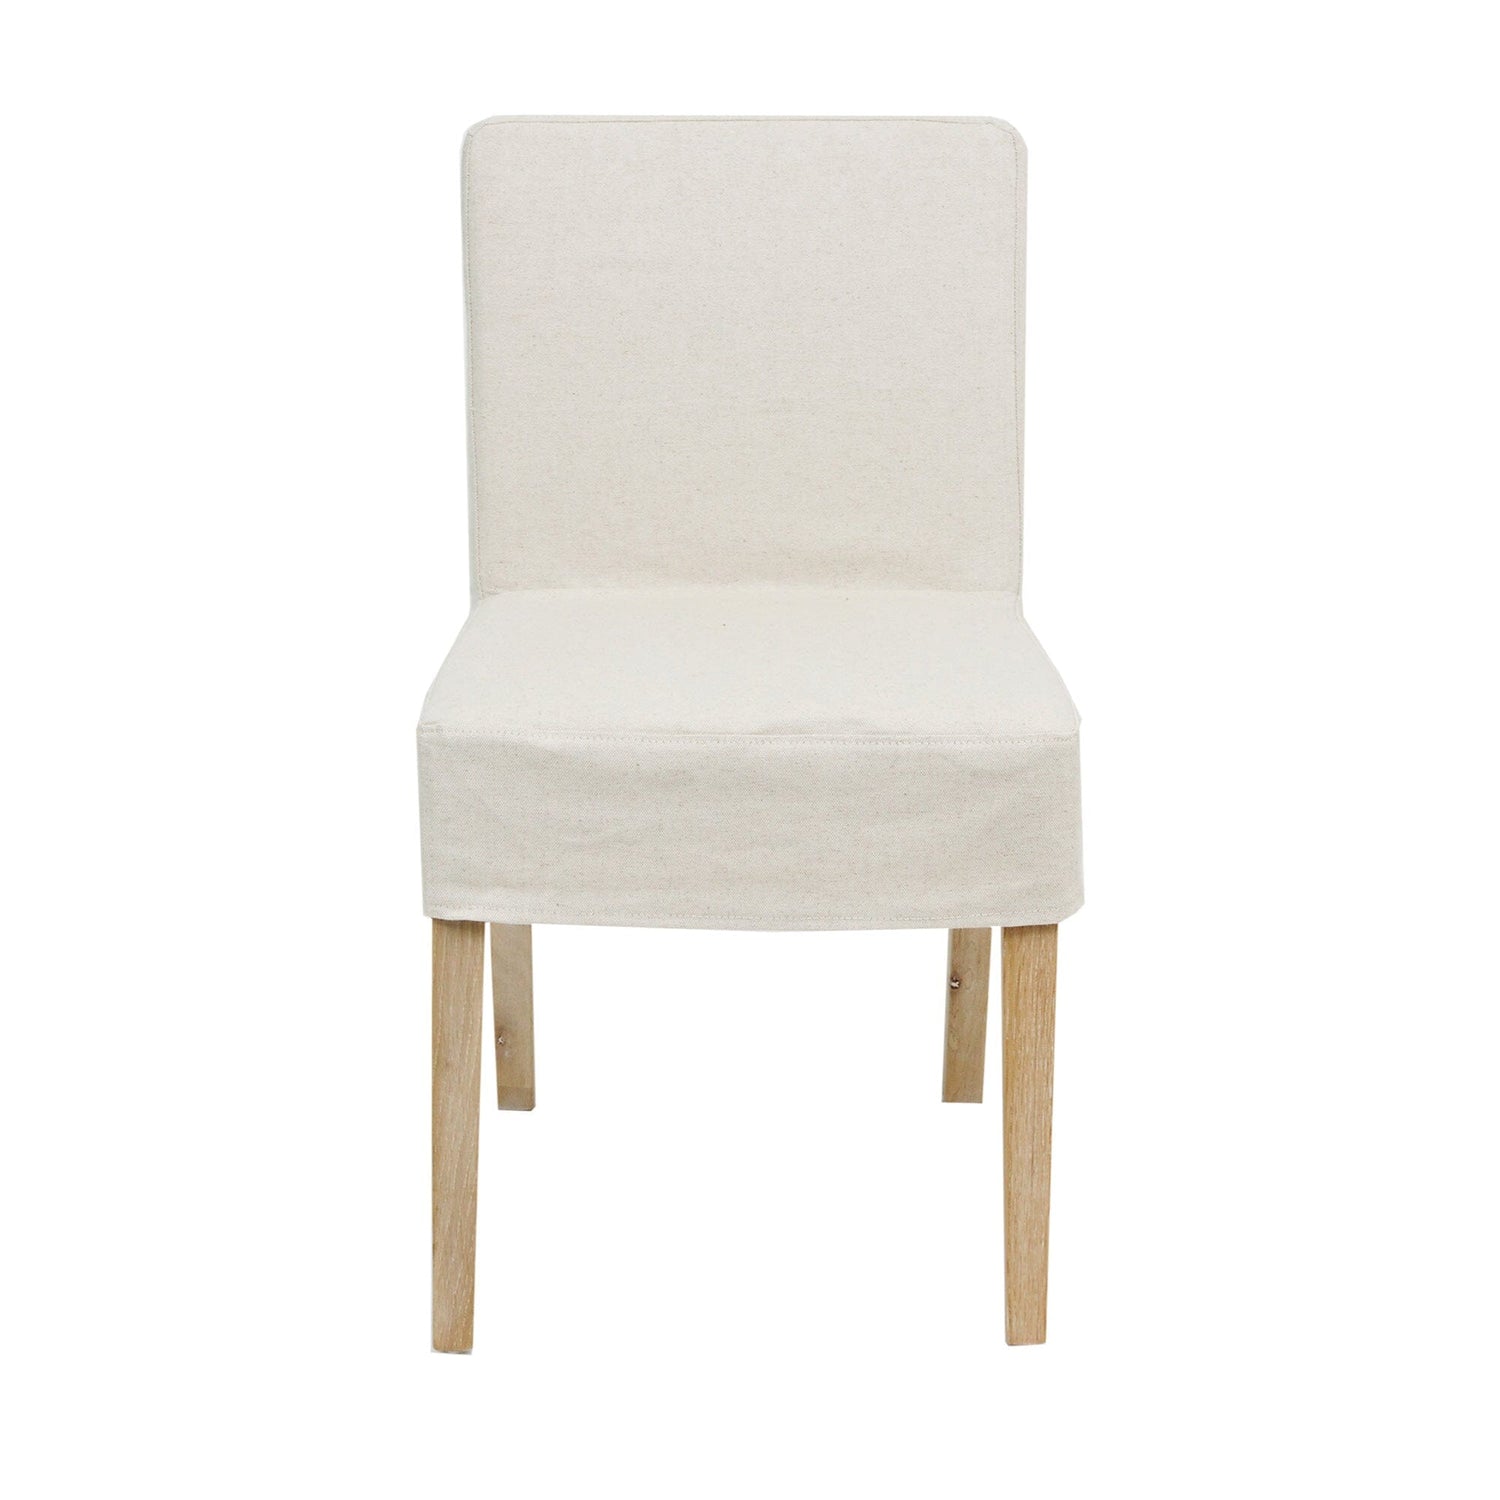 Collaroy Low Back Chair Dining Furniture Beachwood Designs Salt &amp; Pepper Linen Cotton 